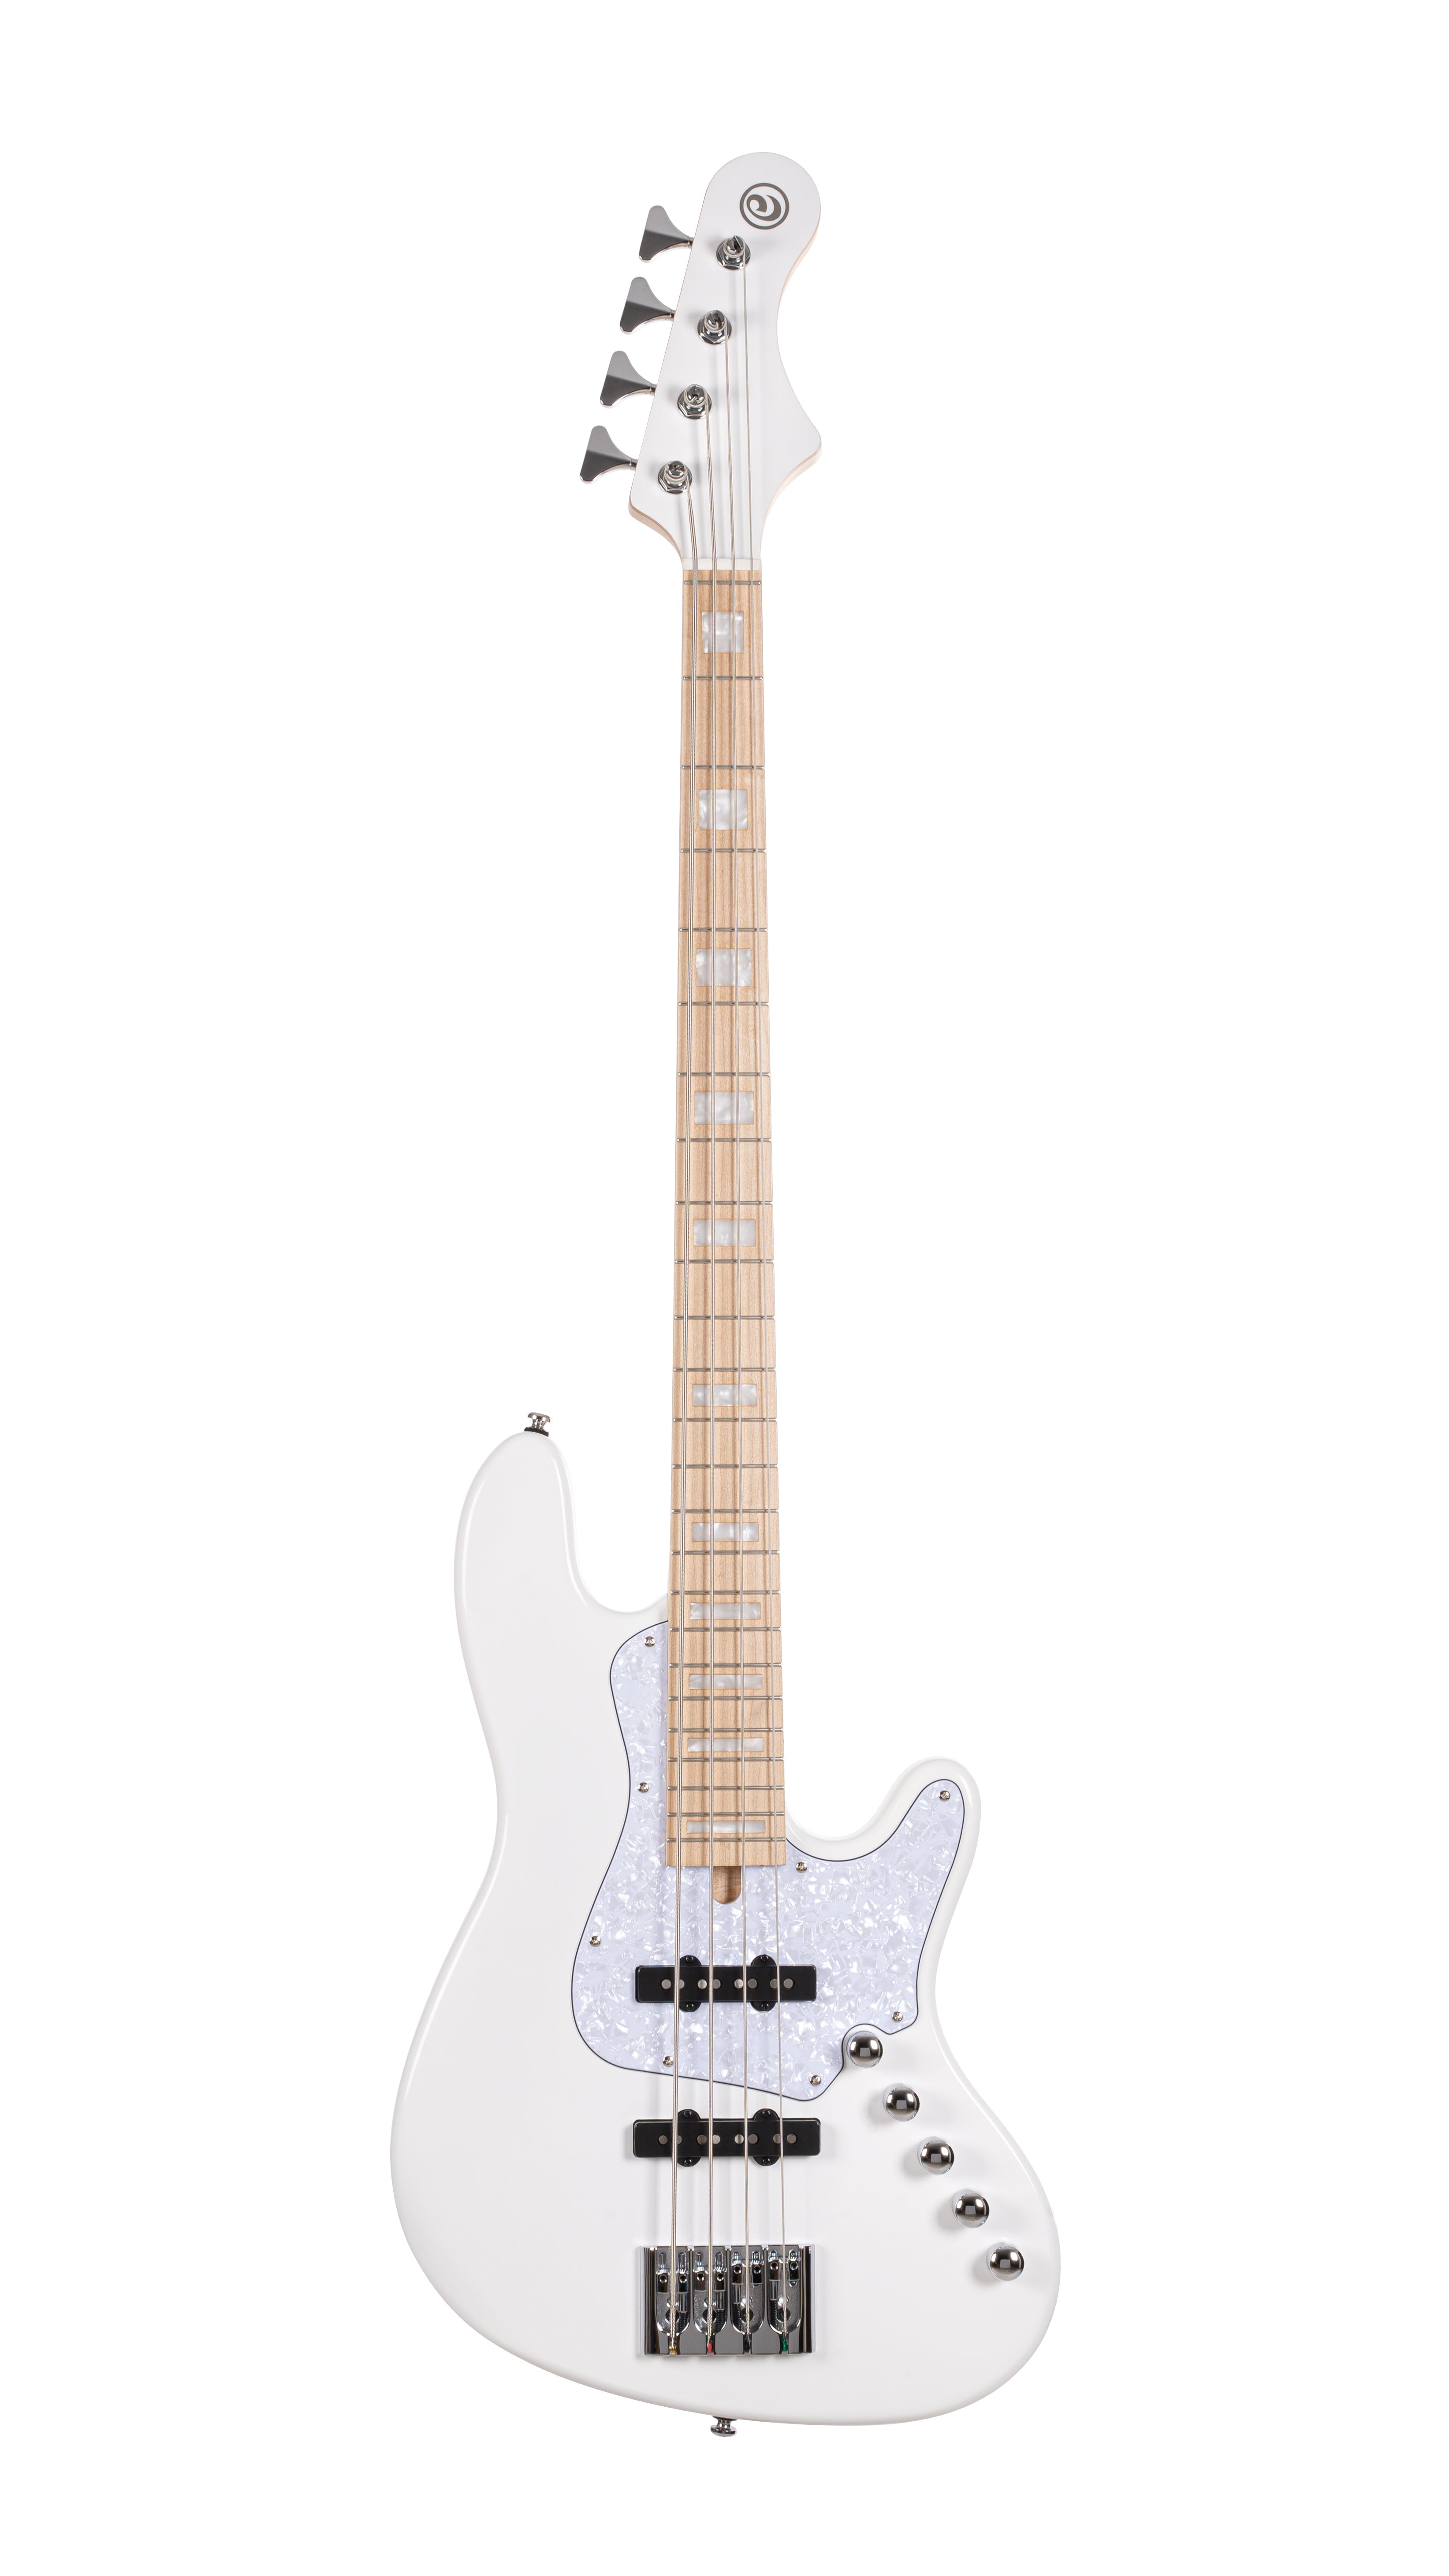 Cort NJS-4 WHT w/Case, Bass Guitar for sale at Richards Guitars.